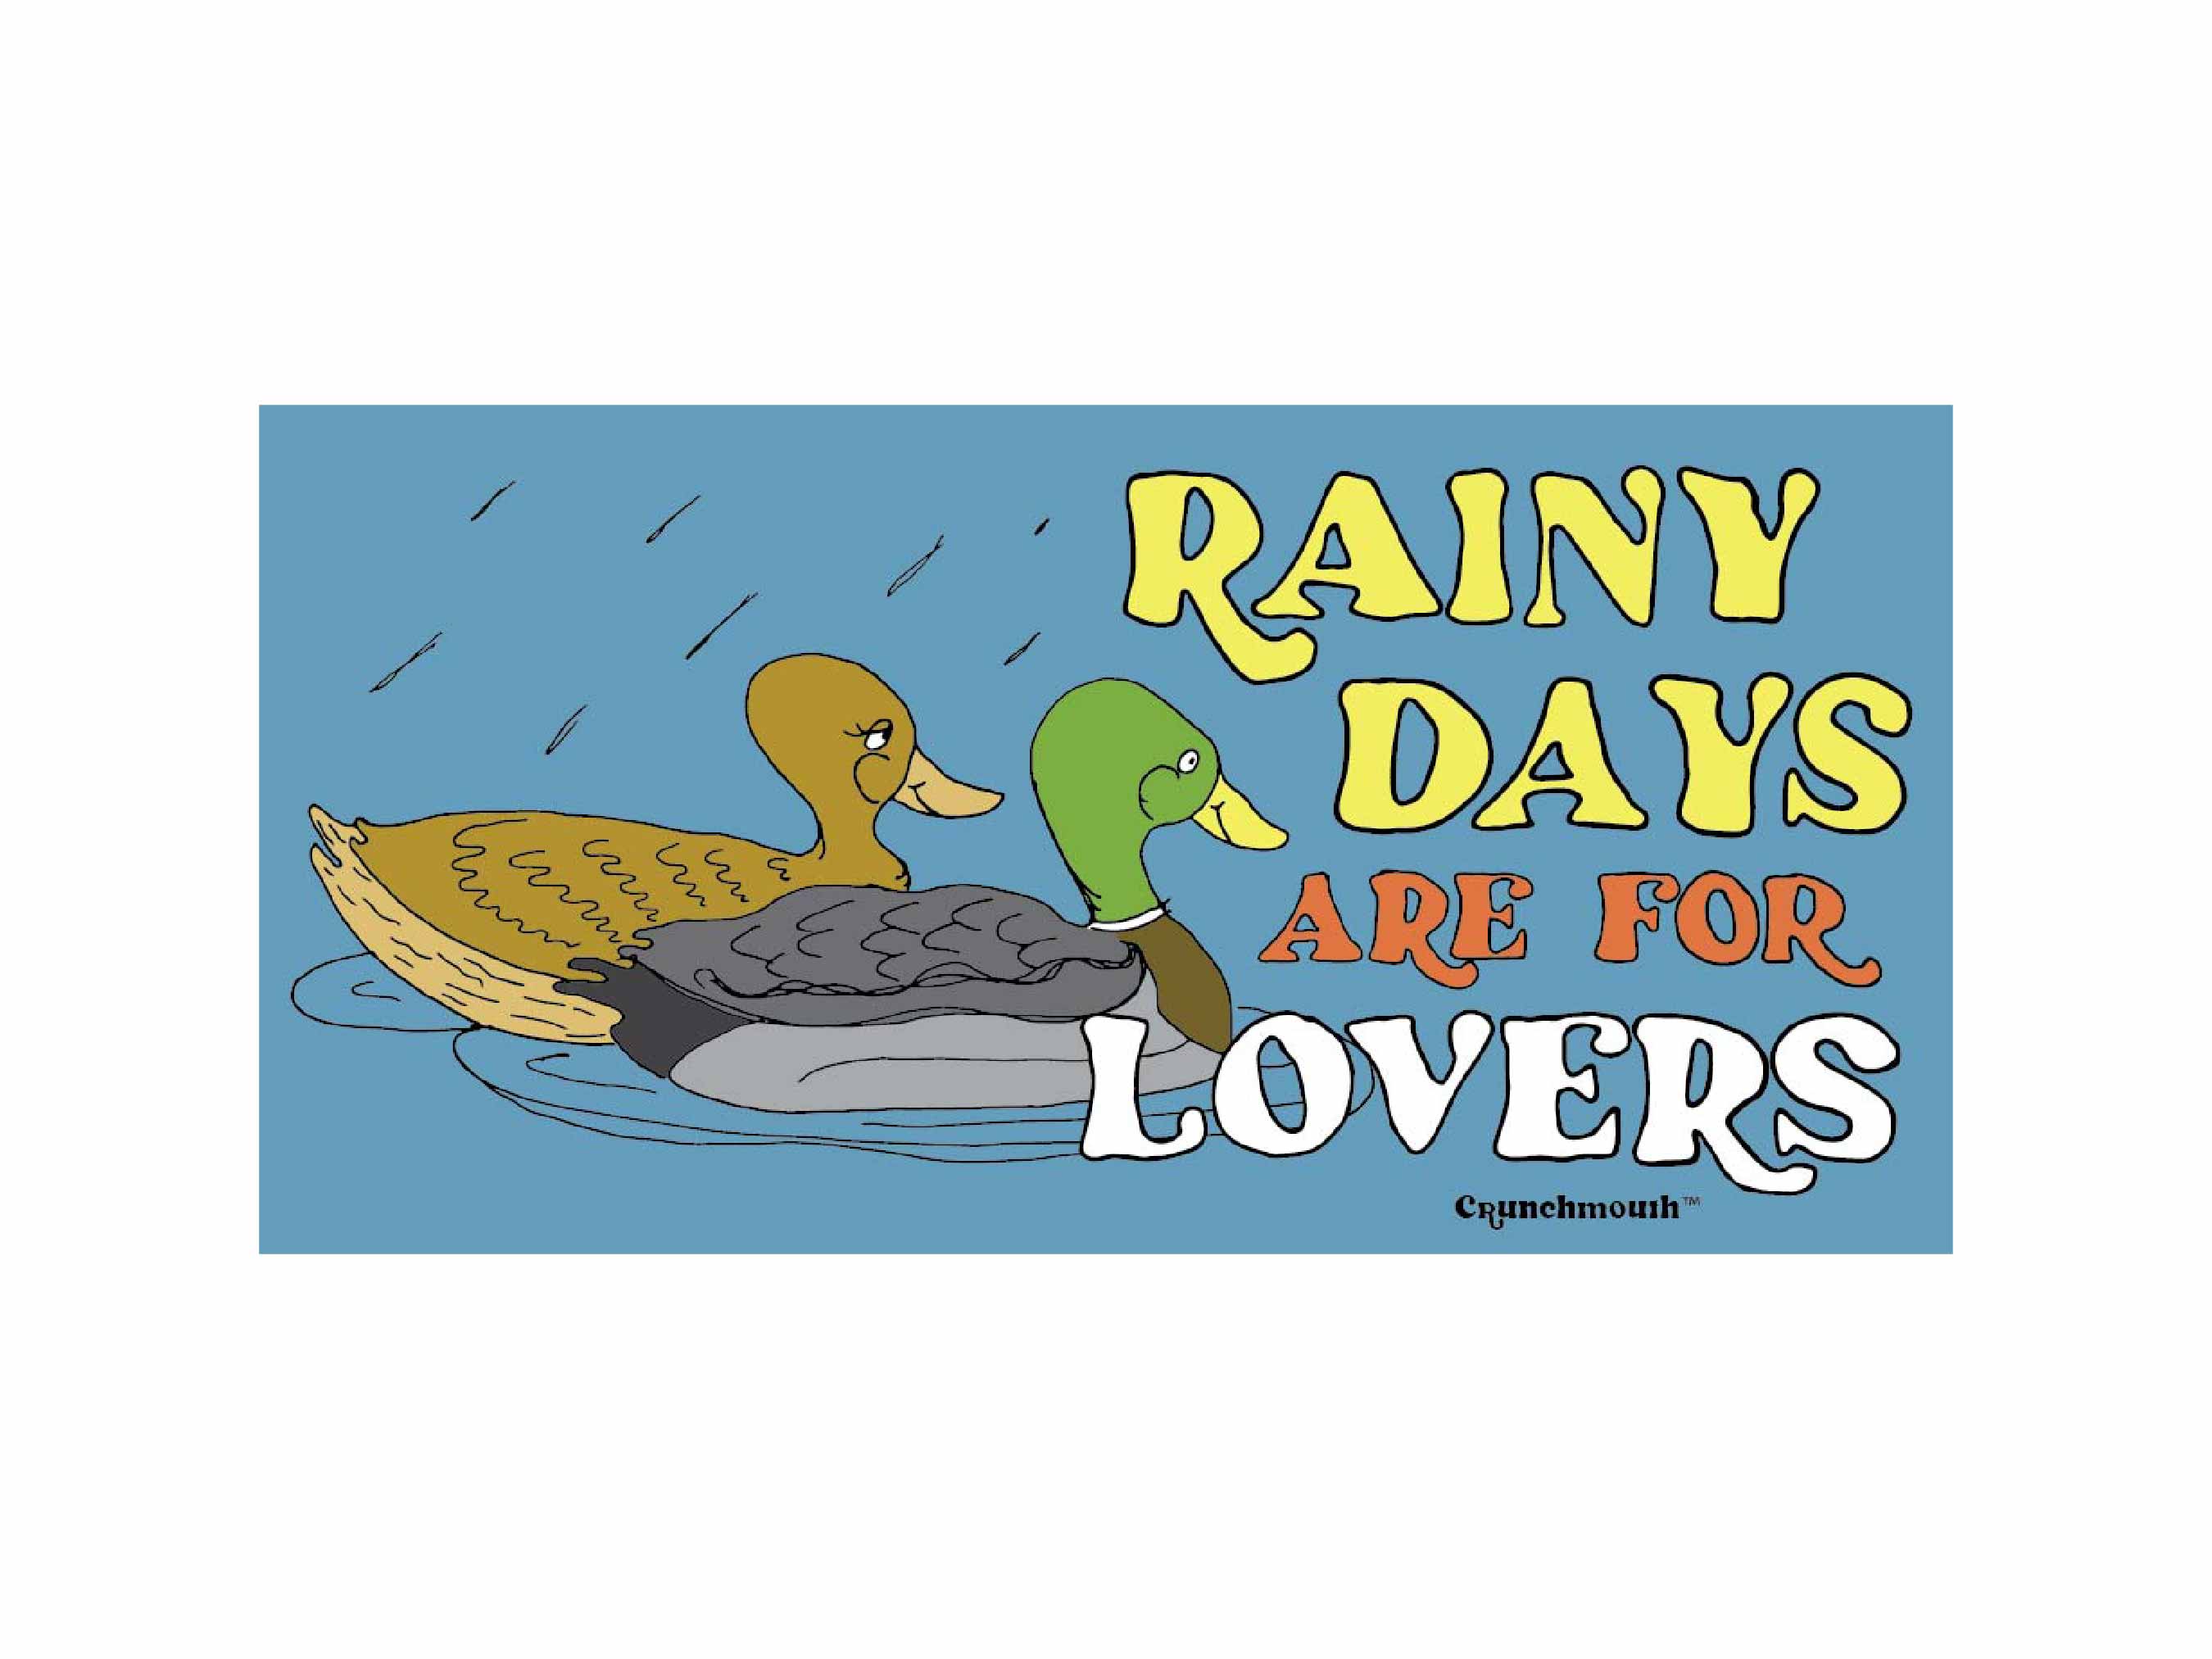 rainy days are for lovers retro style bumper sticker featuring cartoon image of mallard ducks